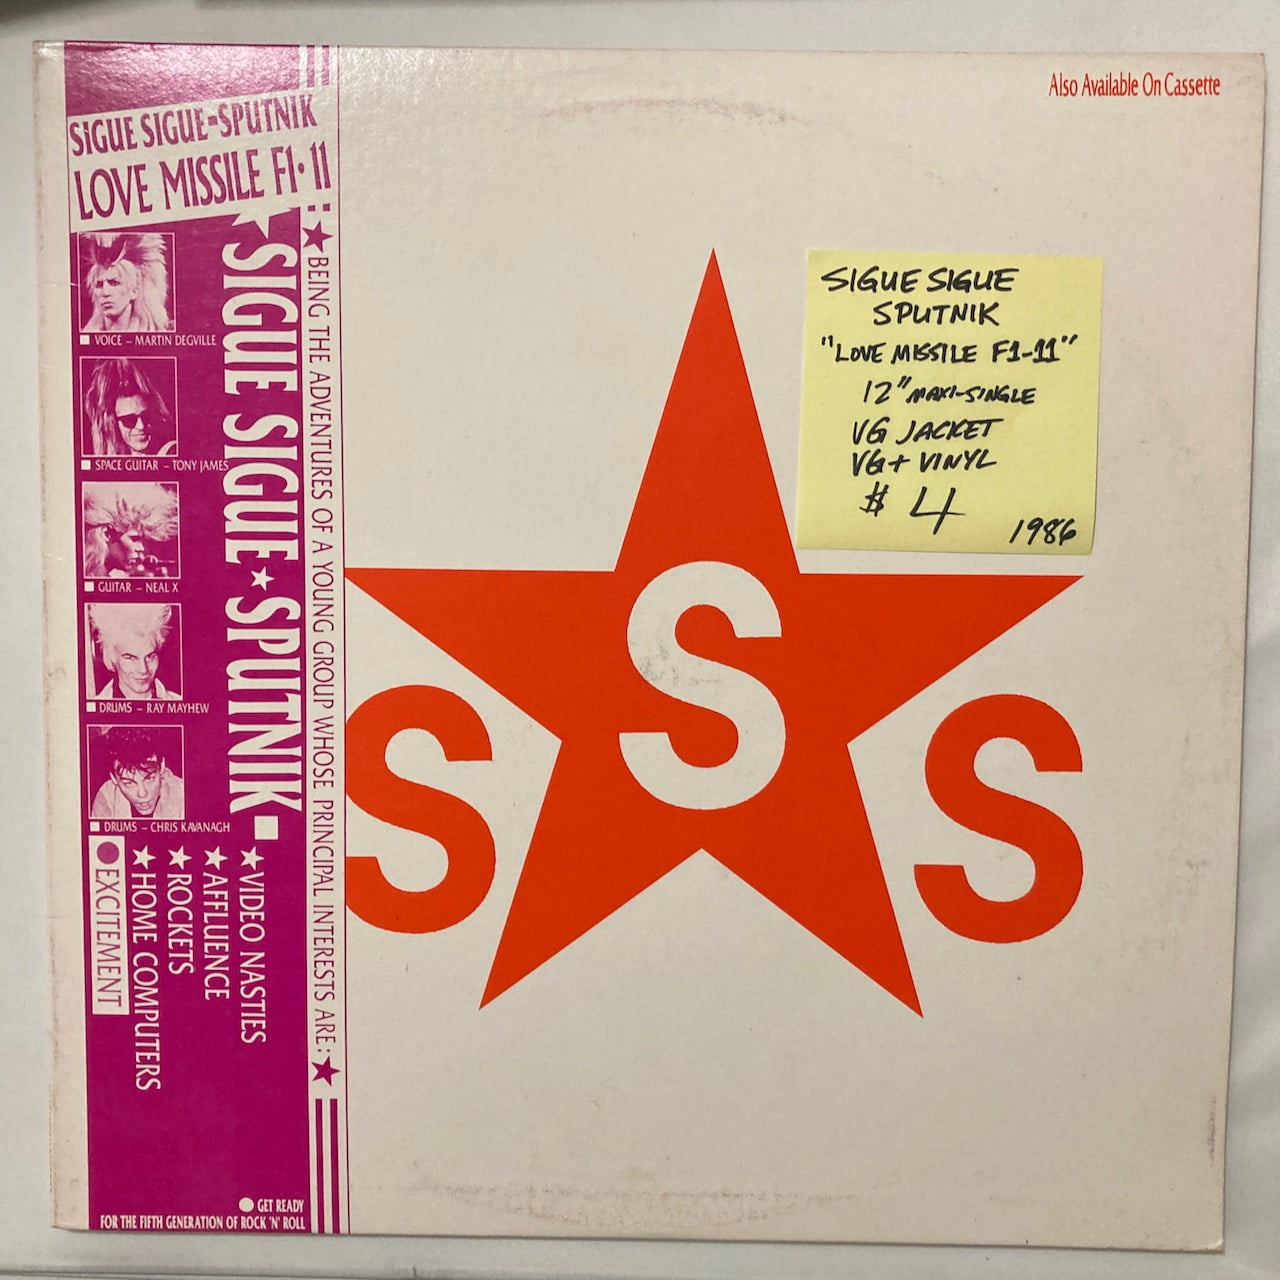 Sigue Sigue Sputnik Vinyl Records